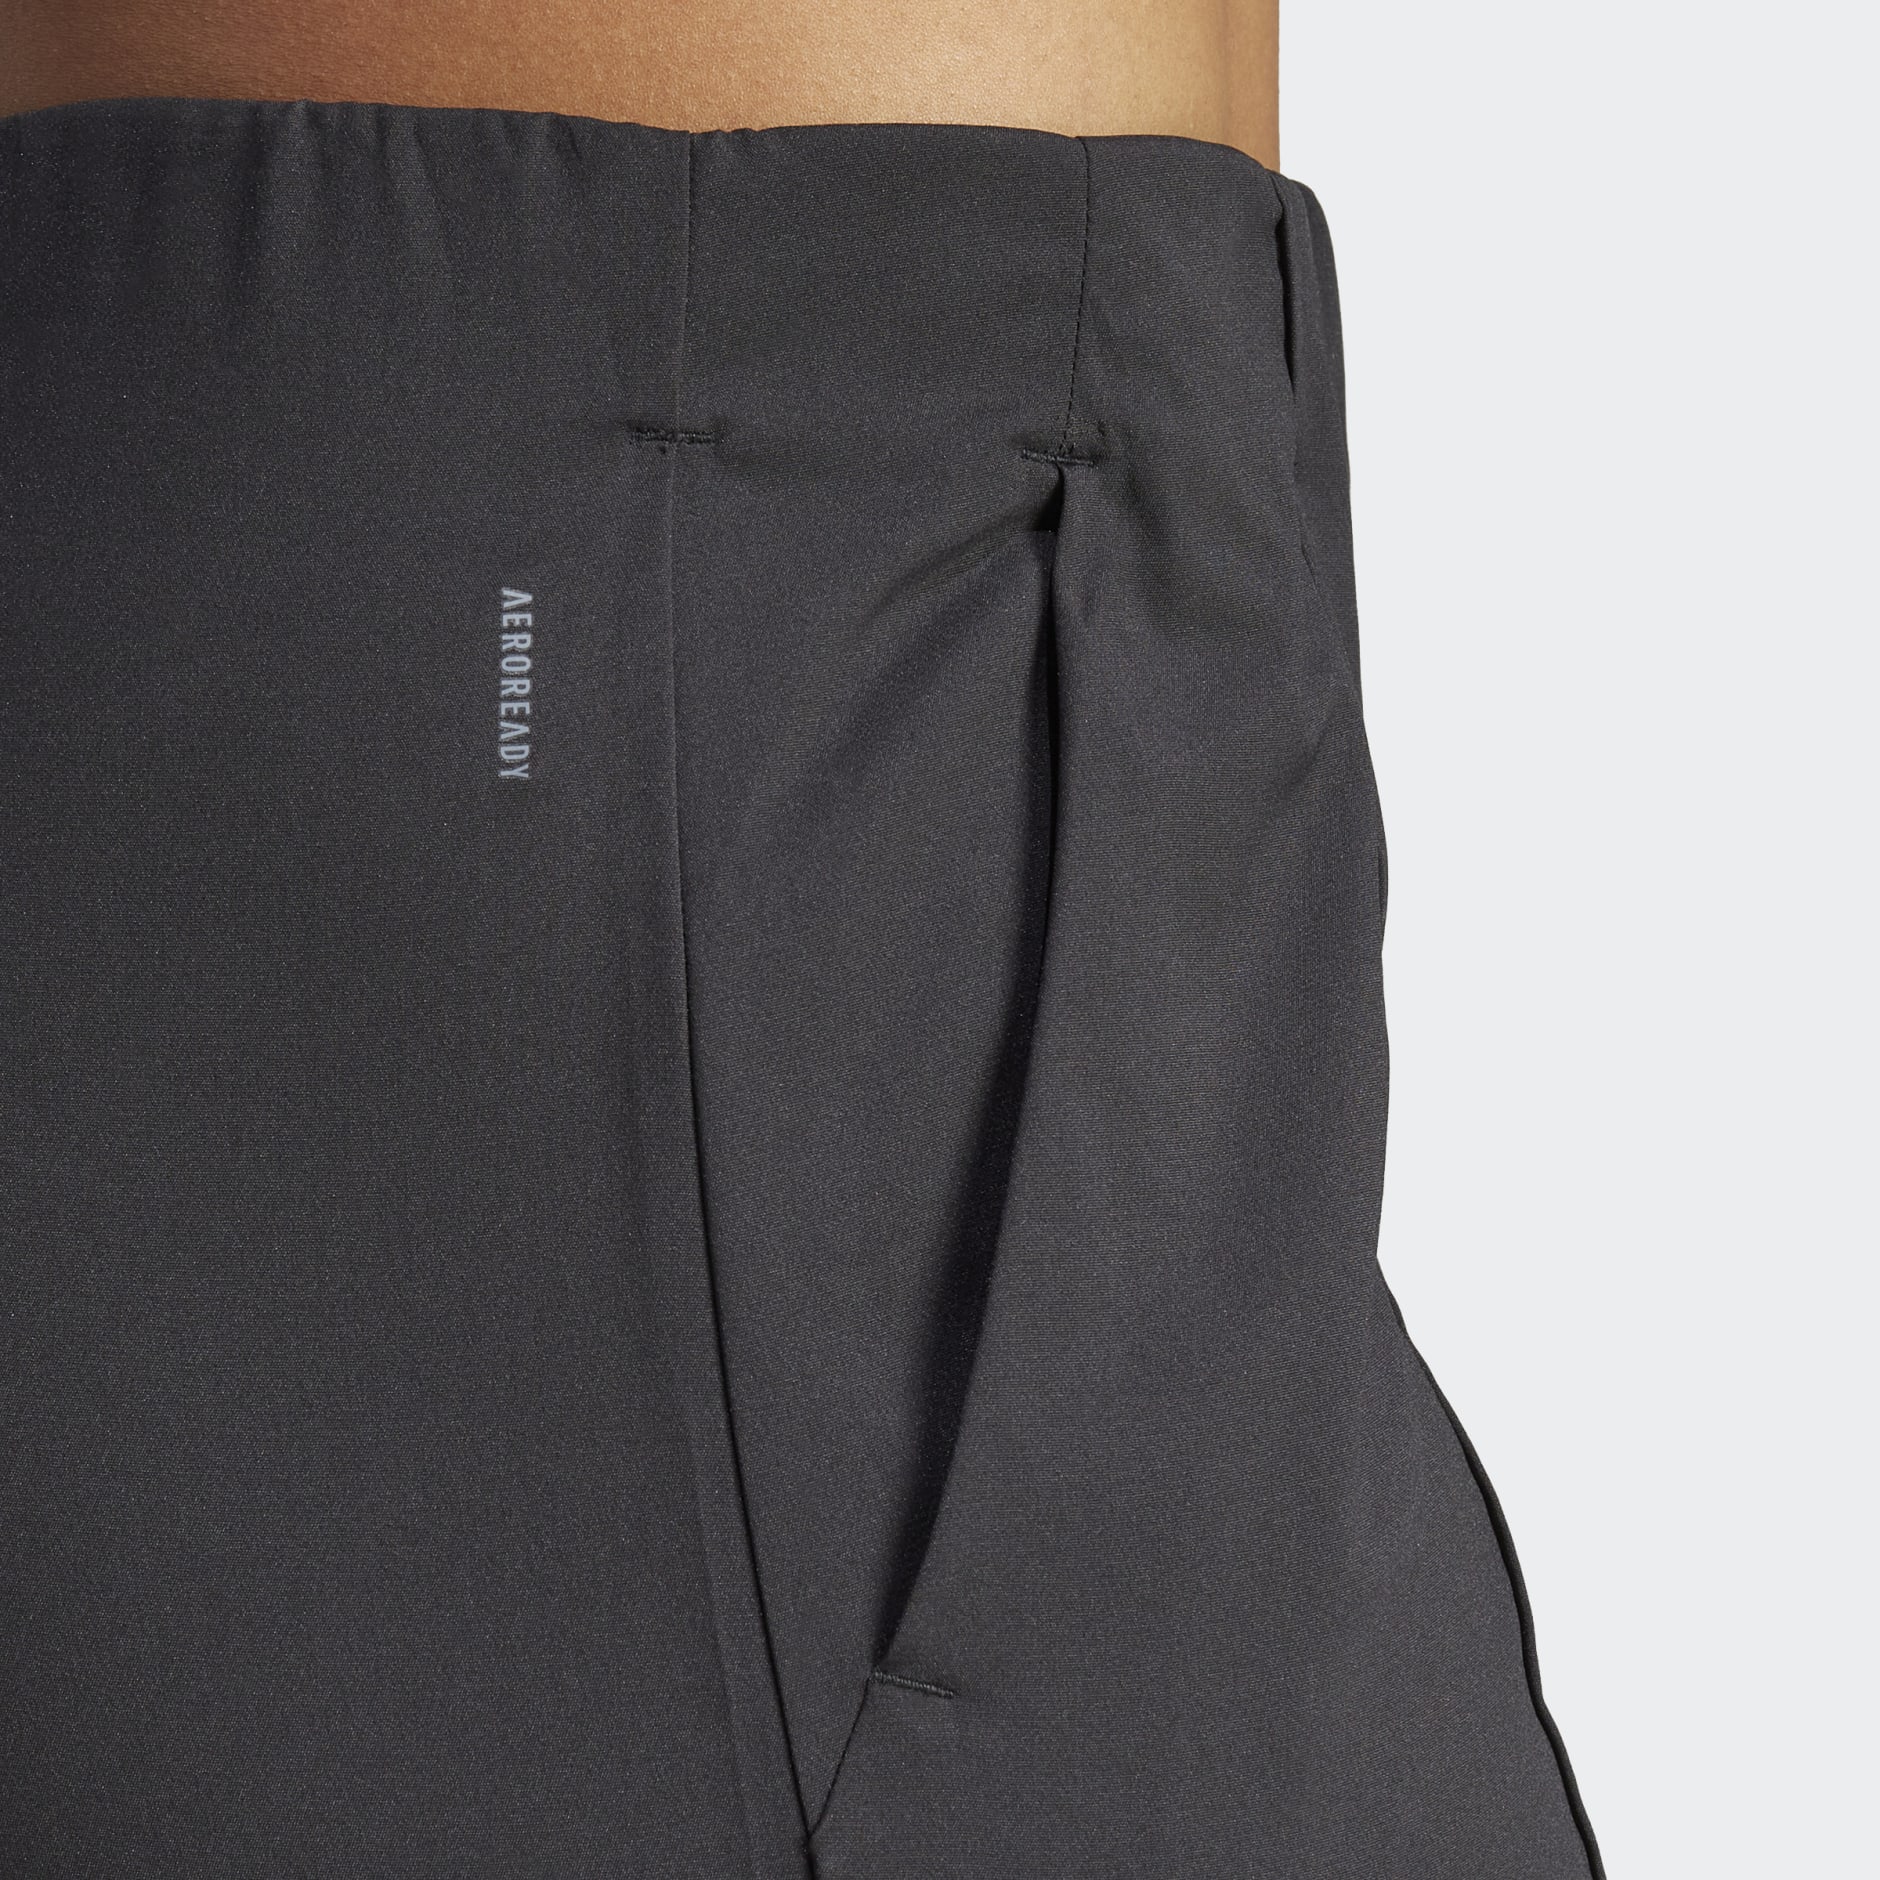 AEROREADY LK Woven adidas Pants Train Essentials | Black - adidas Minimal Branding